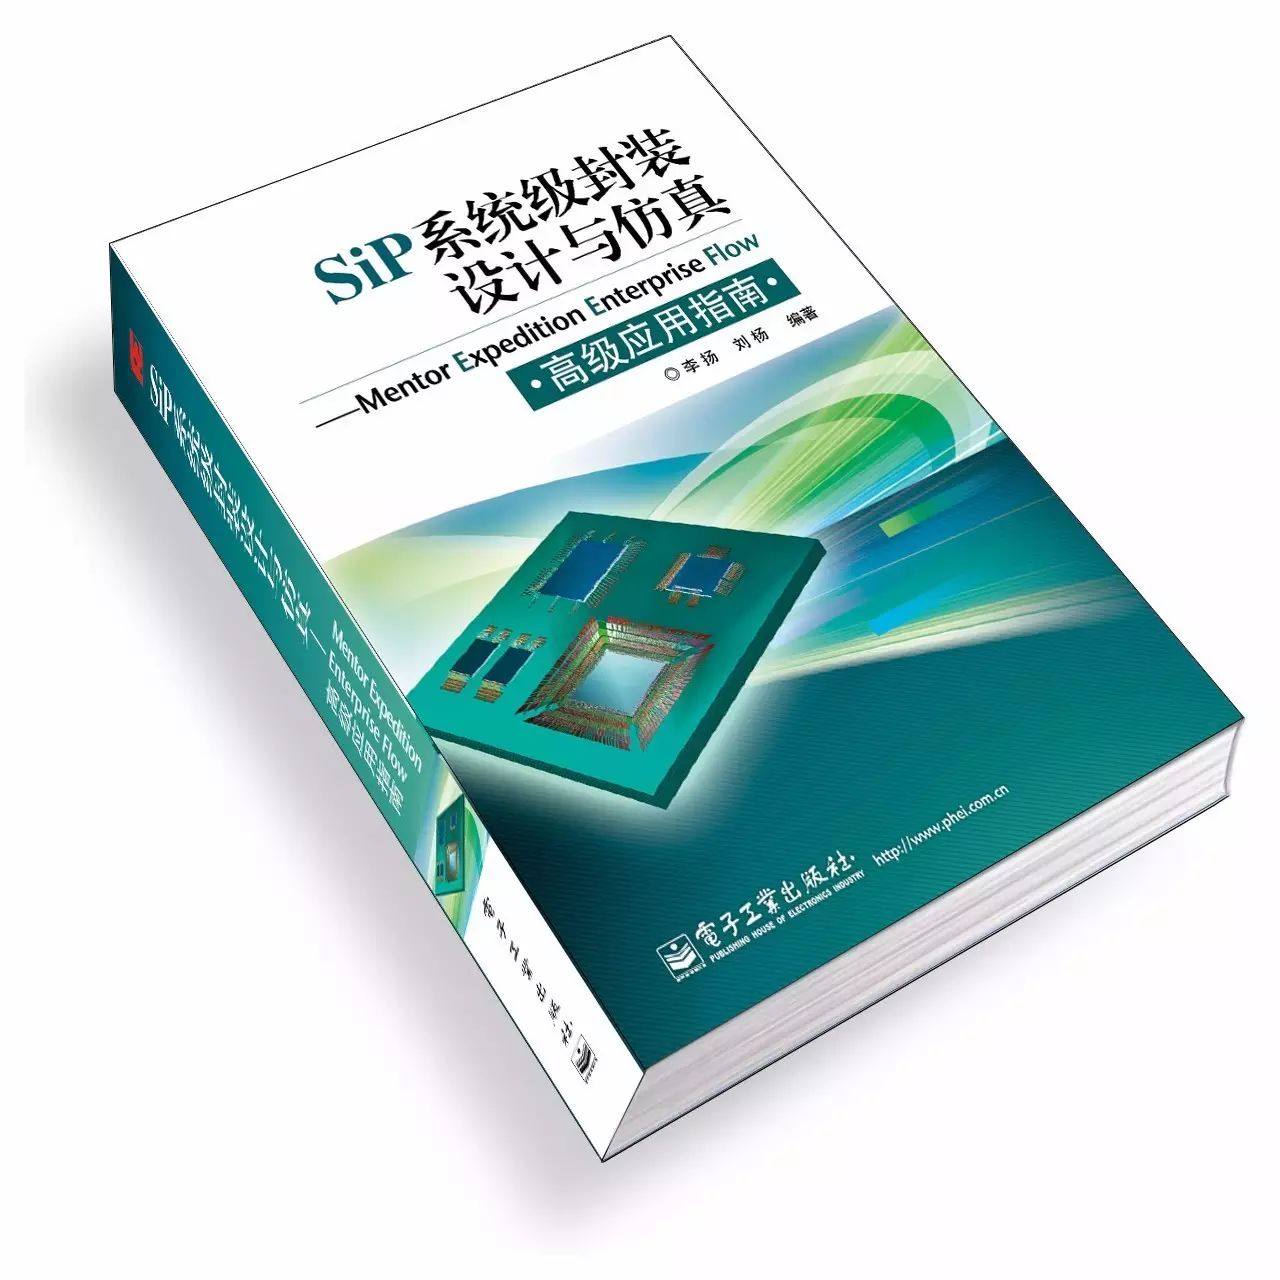 SiP（System in Package）系统级封装技术